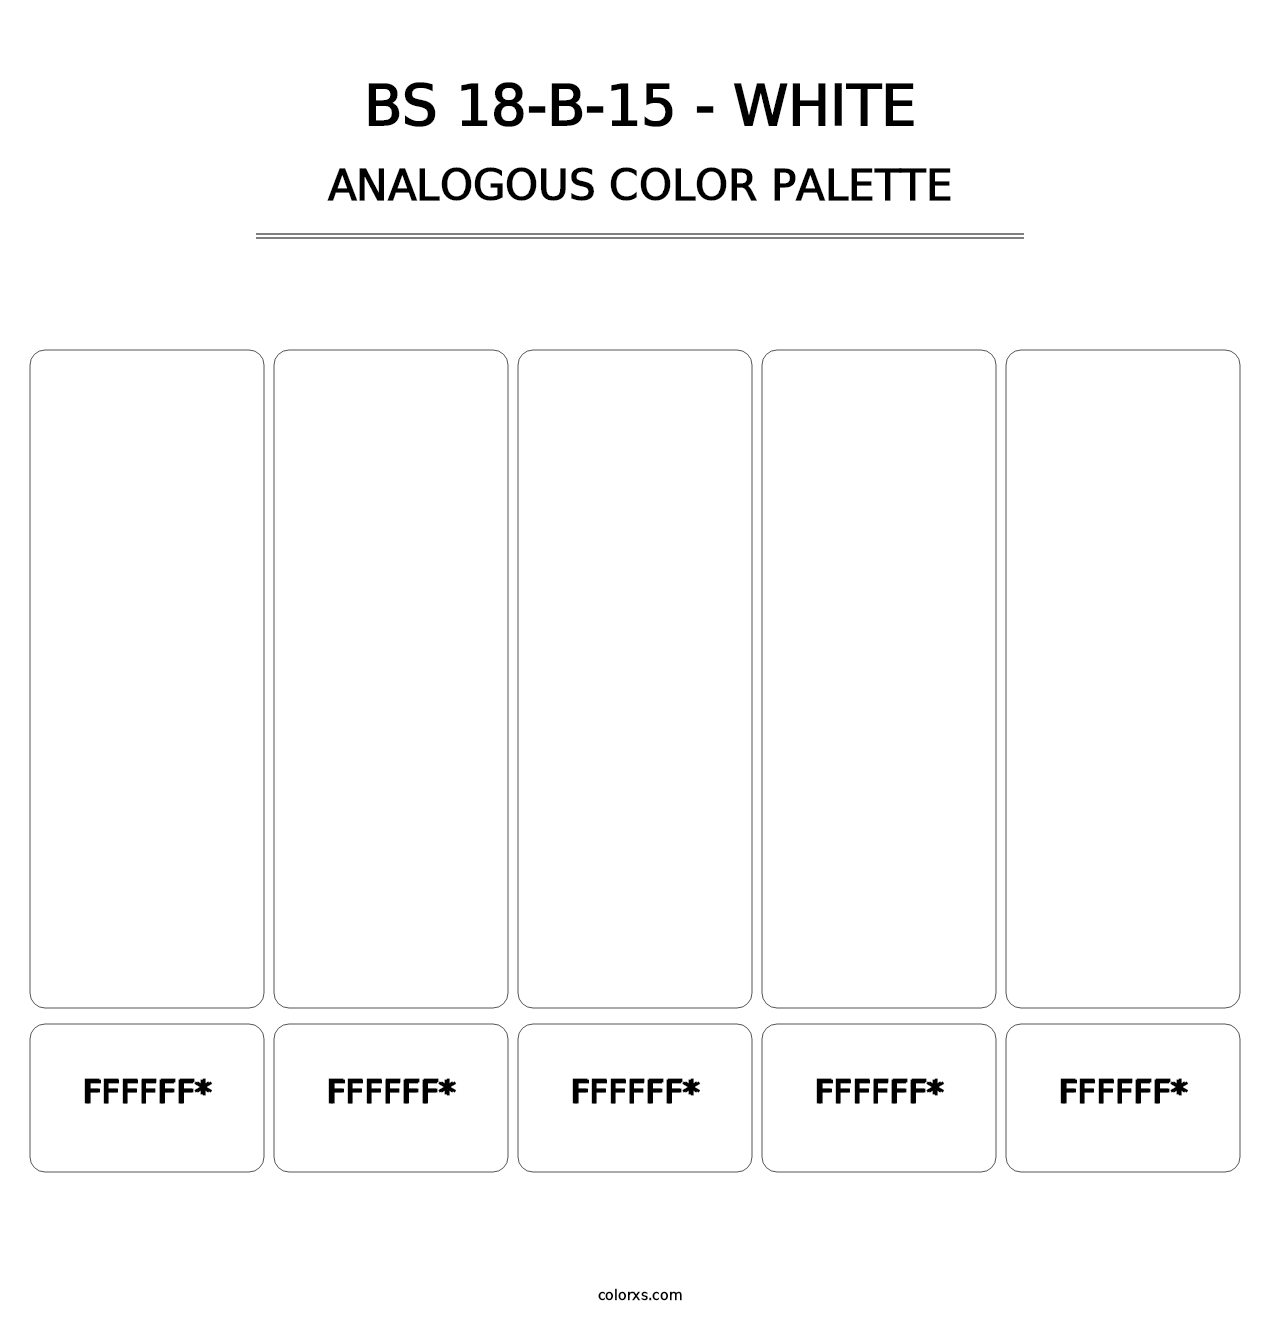 BS 18-B-15 - White - Analogous Color Palette